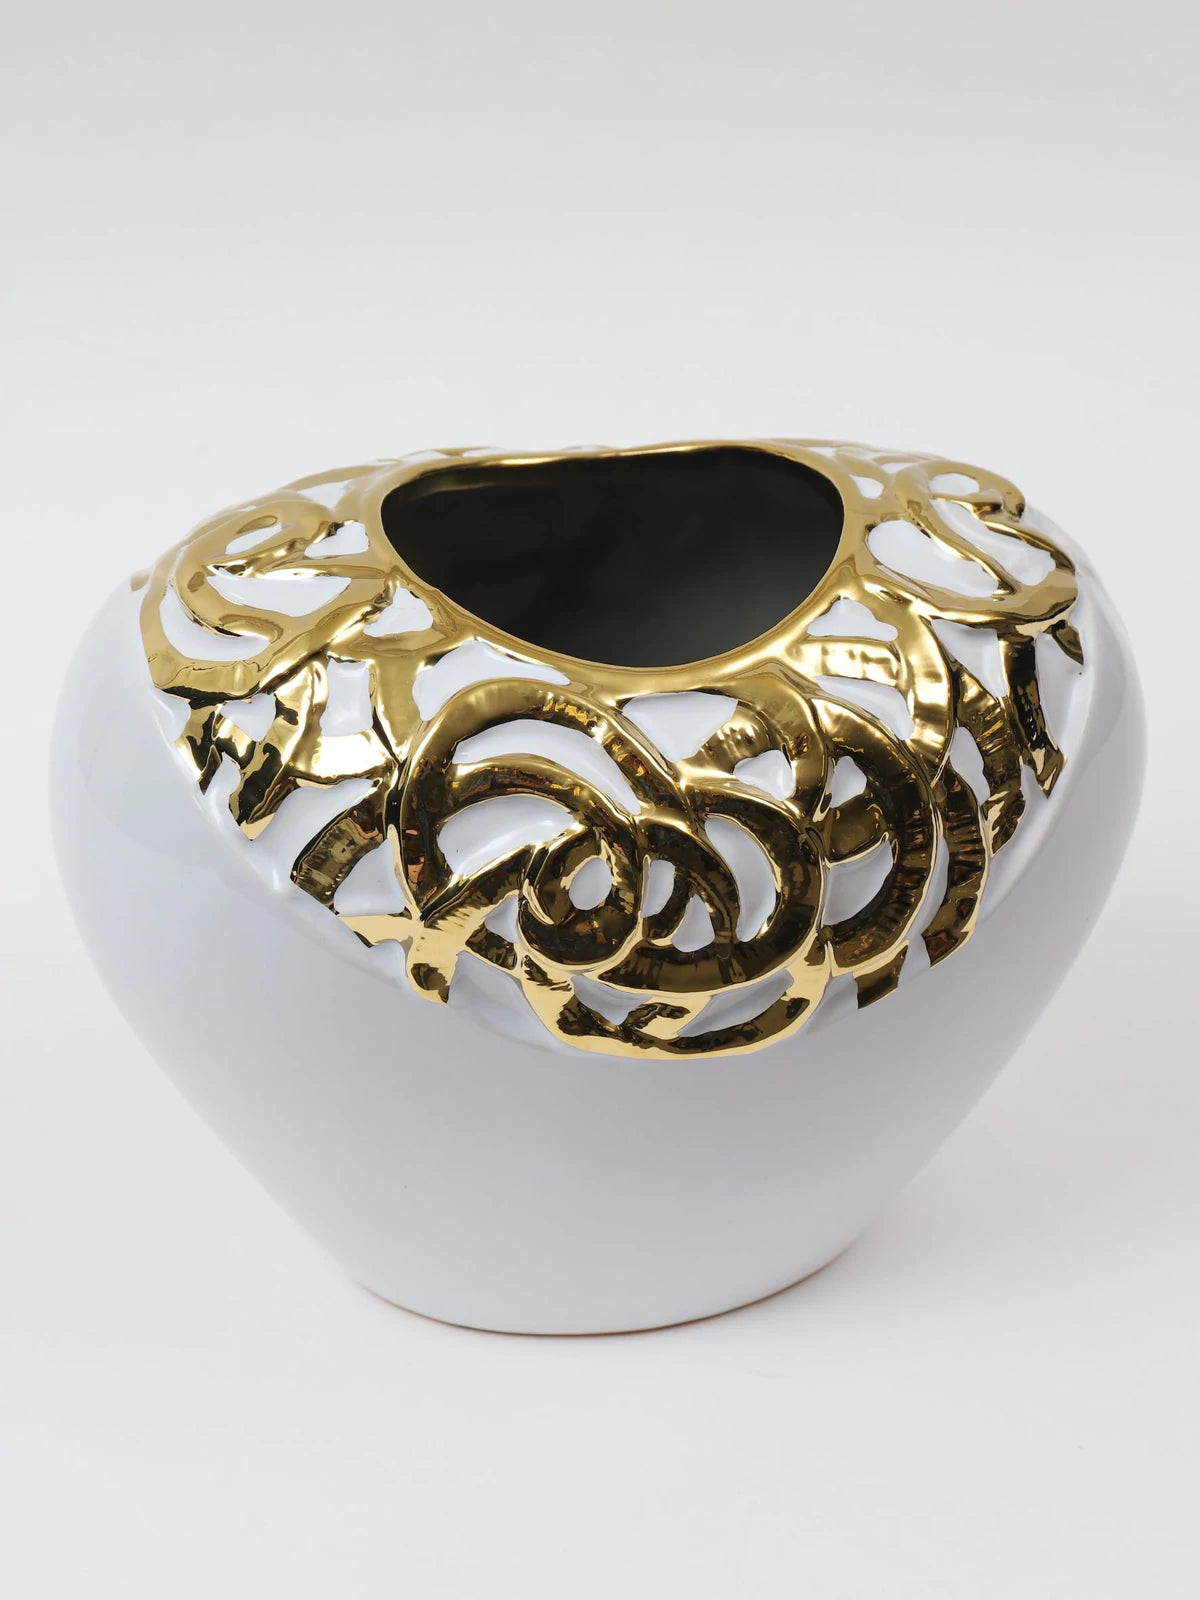 White Ceramic Decorative Vase With Stunning Gold Border Design sold by KYA Home Decor